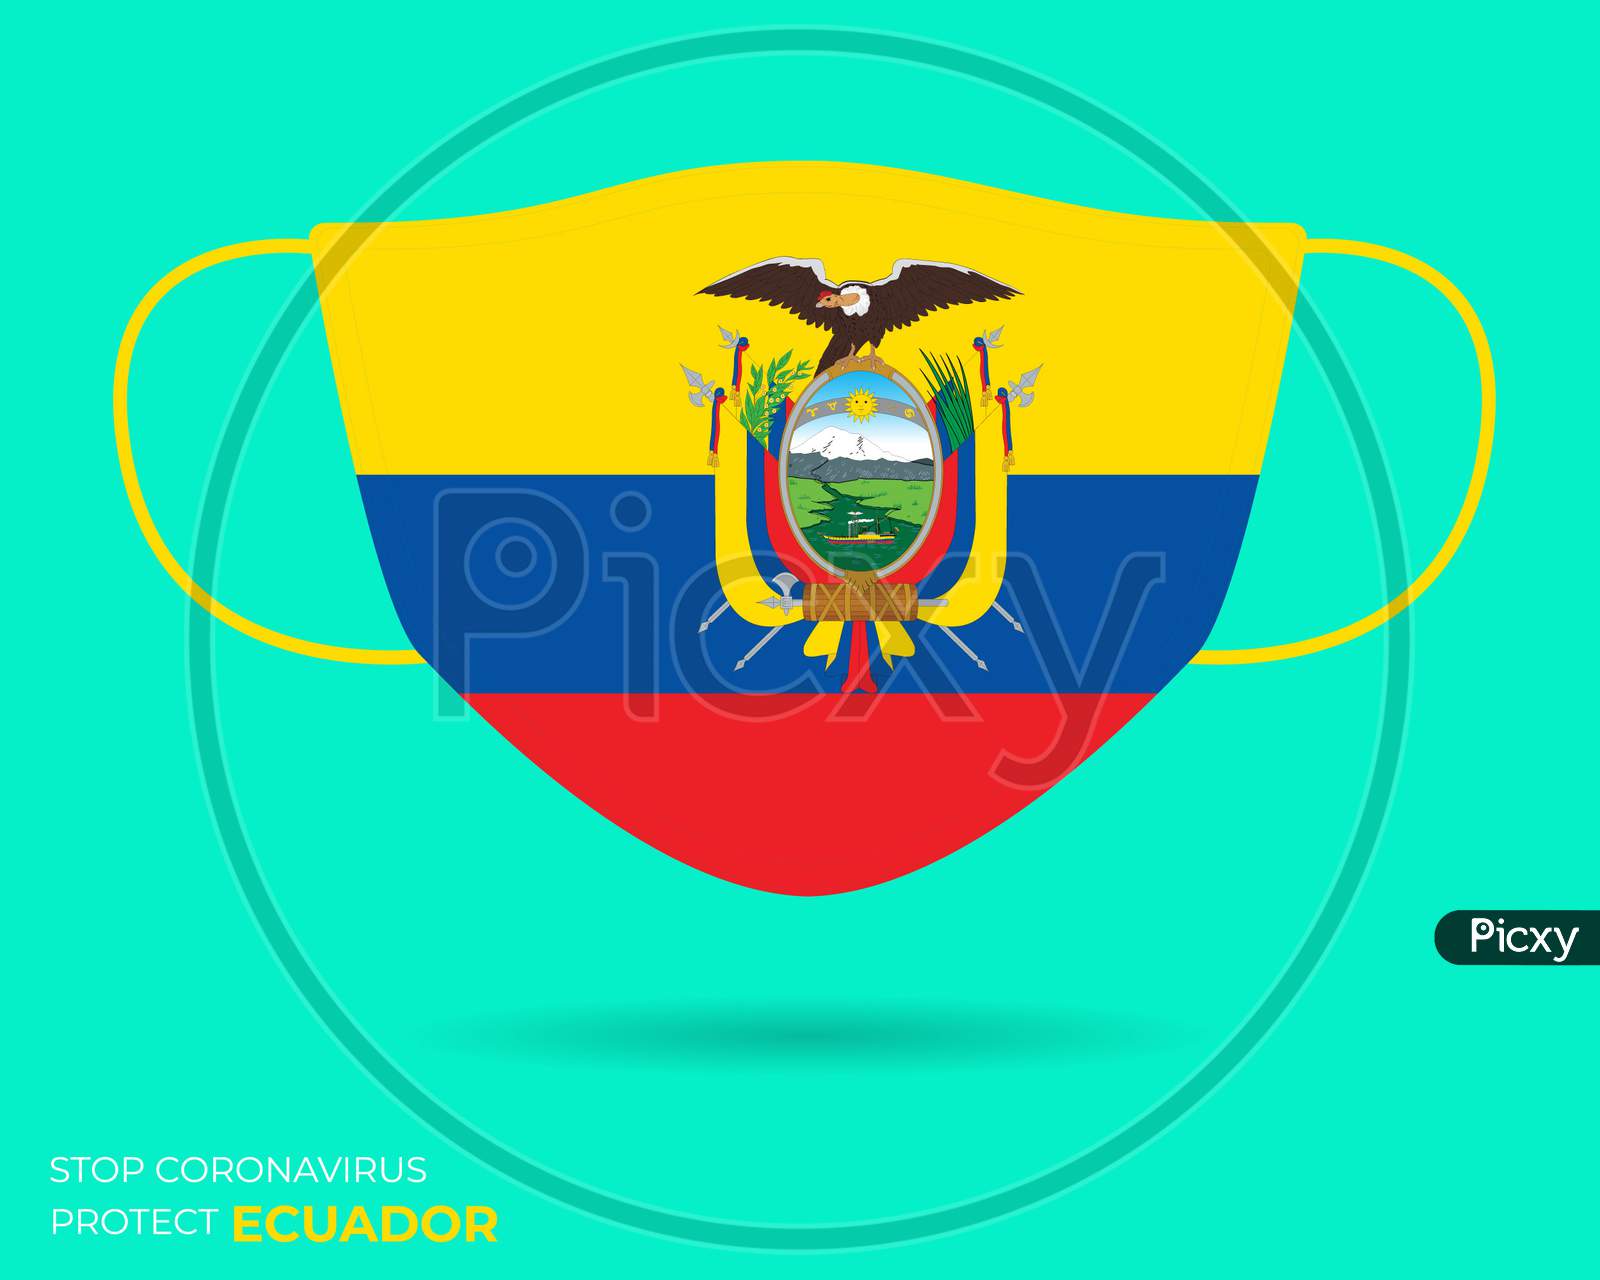 Coronavirus In Ecuador.Graphic Vector Of Surgical Mask With Ecuador Flag.(2019-Ncov Or Covid-19).Medical Face Mask As Concept Of Coronavirus Quarantine. Coronavirus Outbreak. Use For Printing Eps File